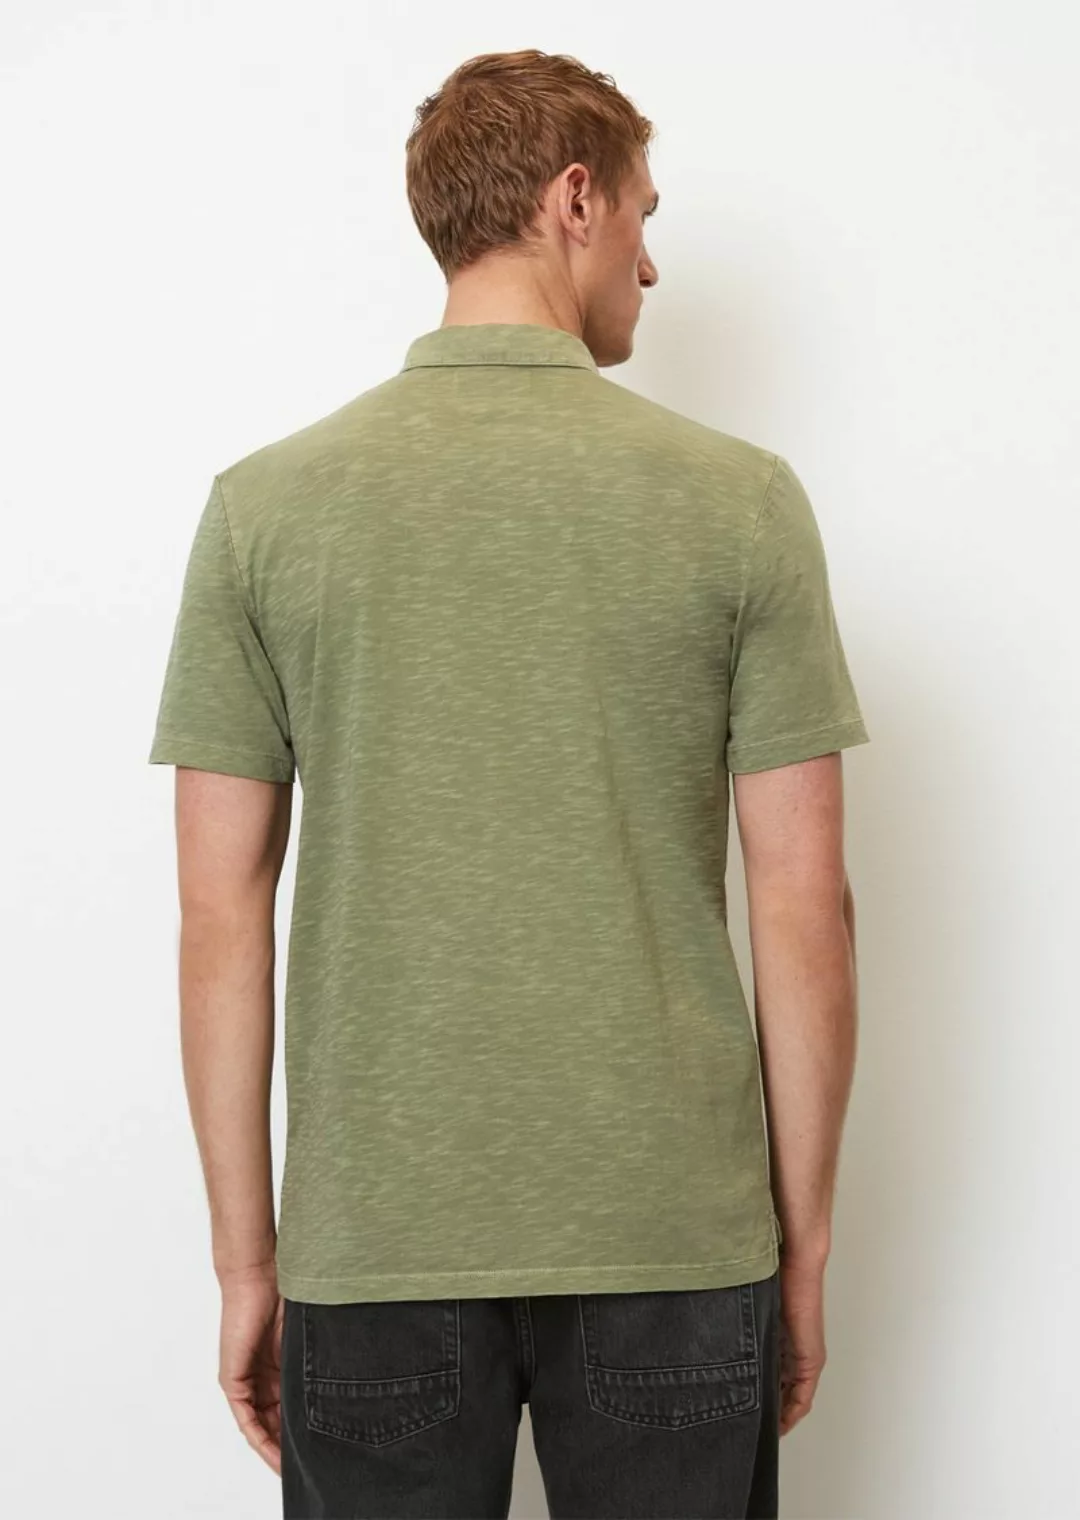 Marc O'Polo Polohemd Melange Oliv Grün - Größe XL günstig online kaufen